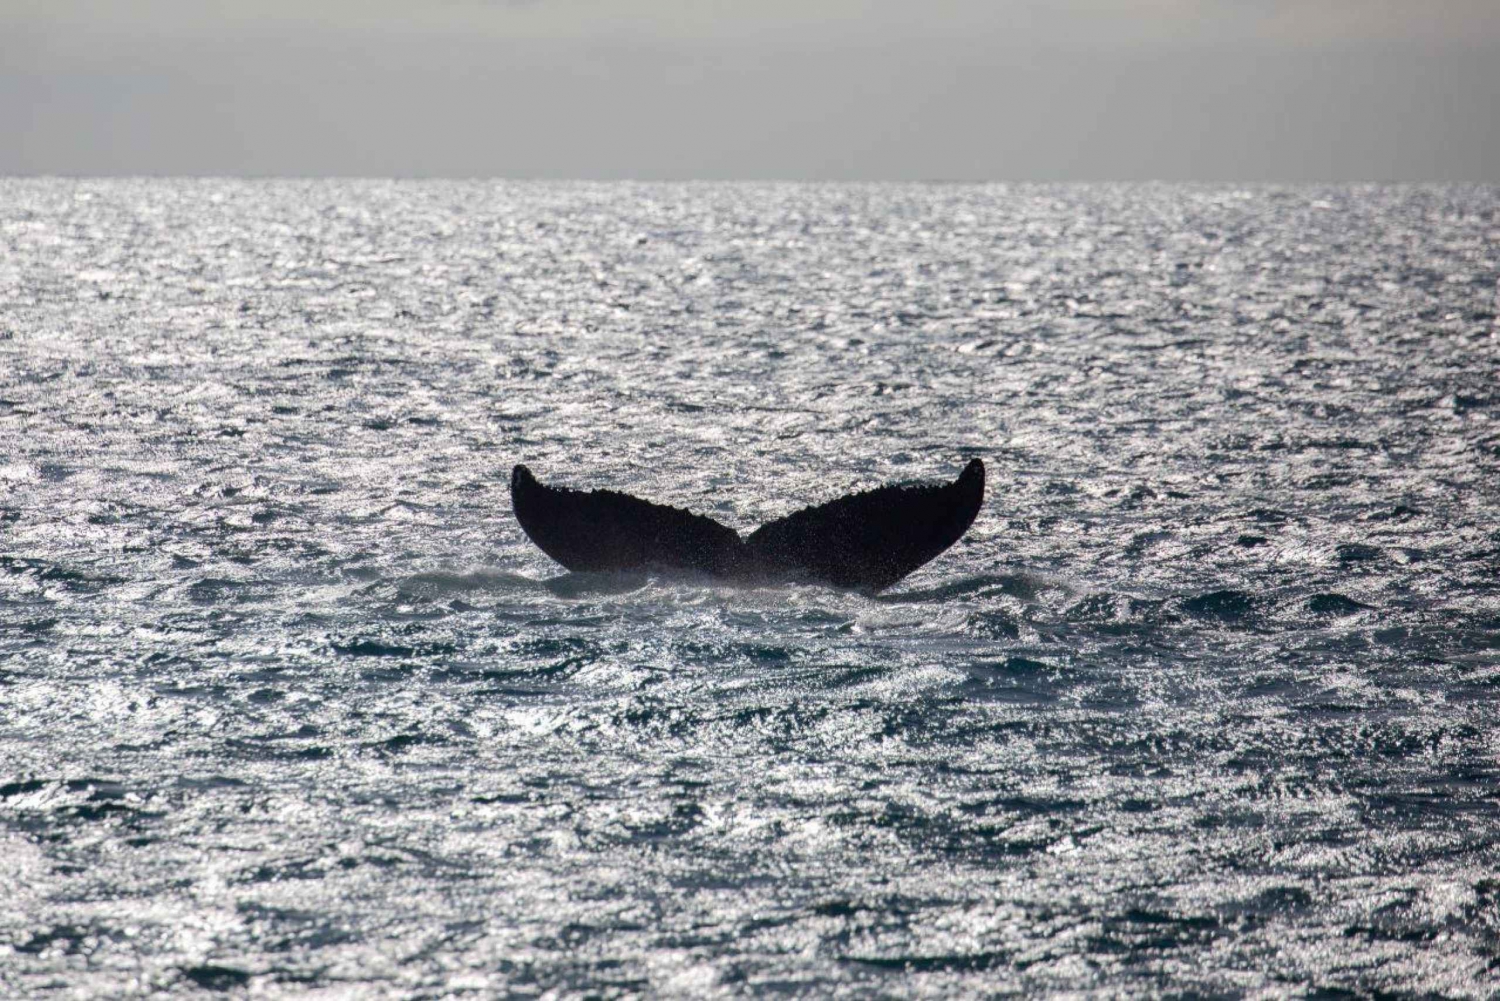 Koa Kai Aventura de Avistamiento de Ballenas al Atardecer en Maui